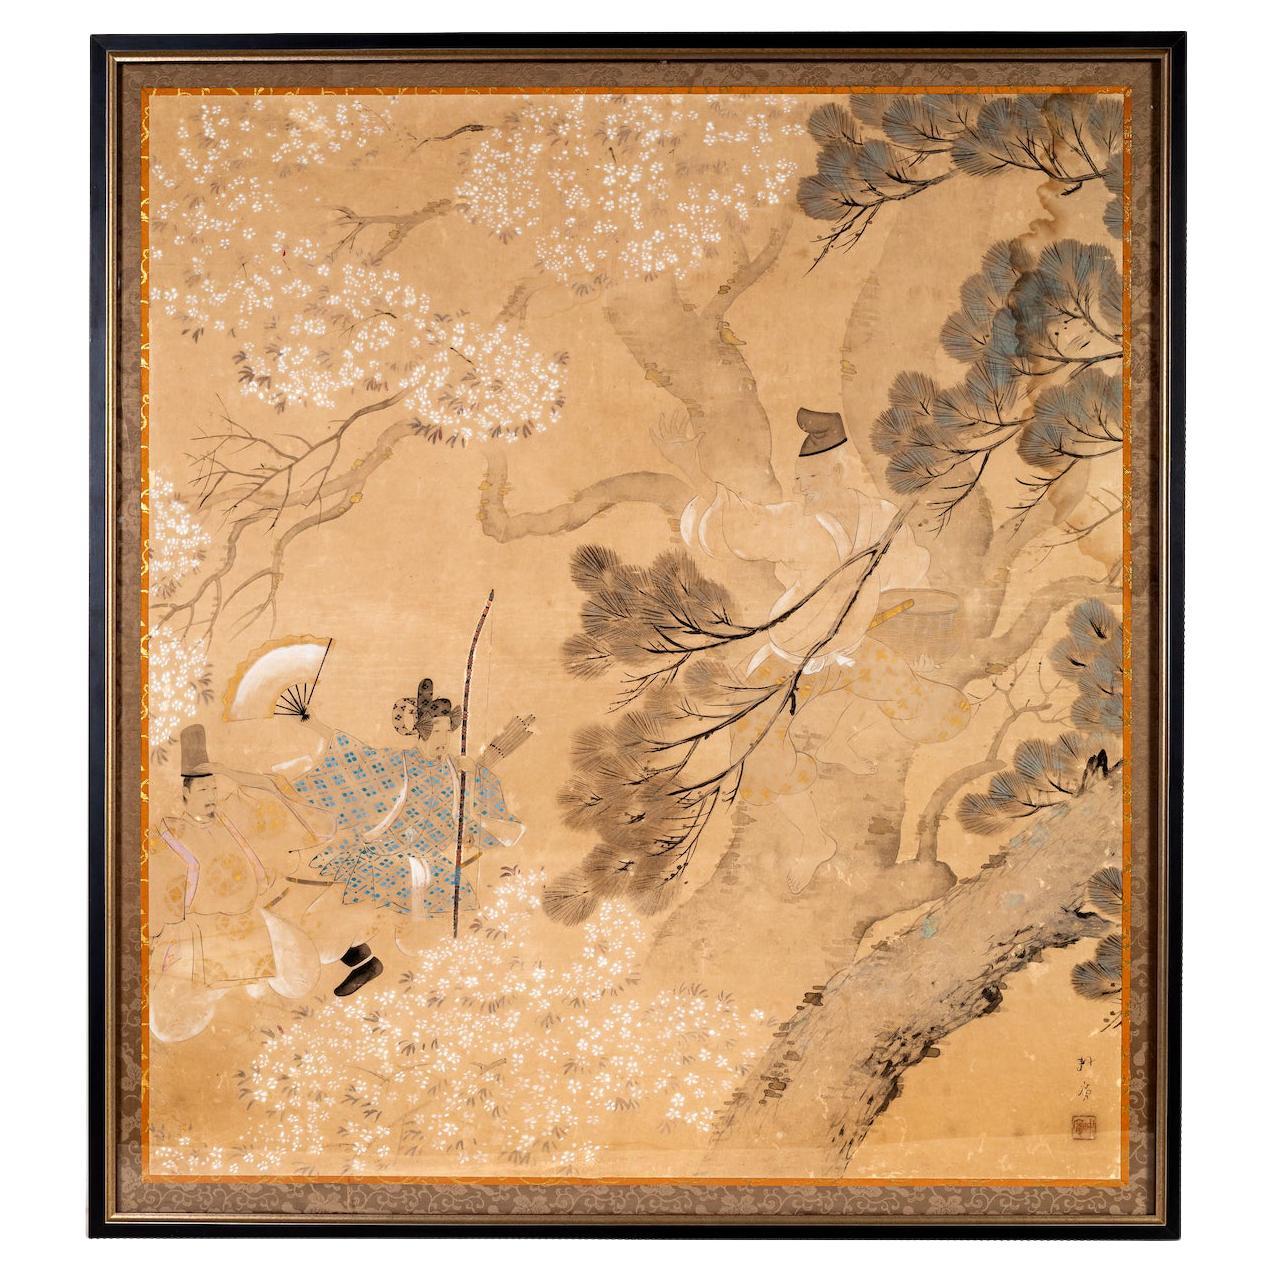 Framed Japanese Painting on Silk, Court Figures in a Garden Landscape